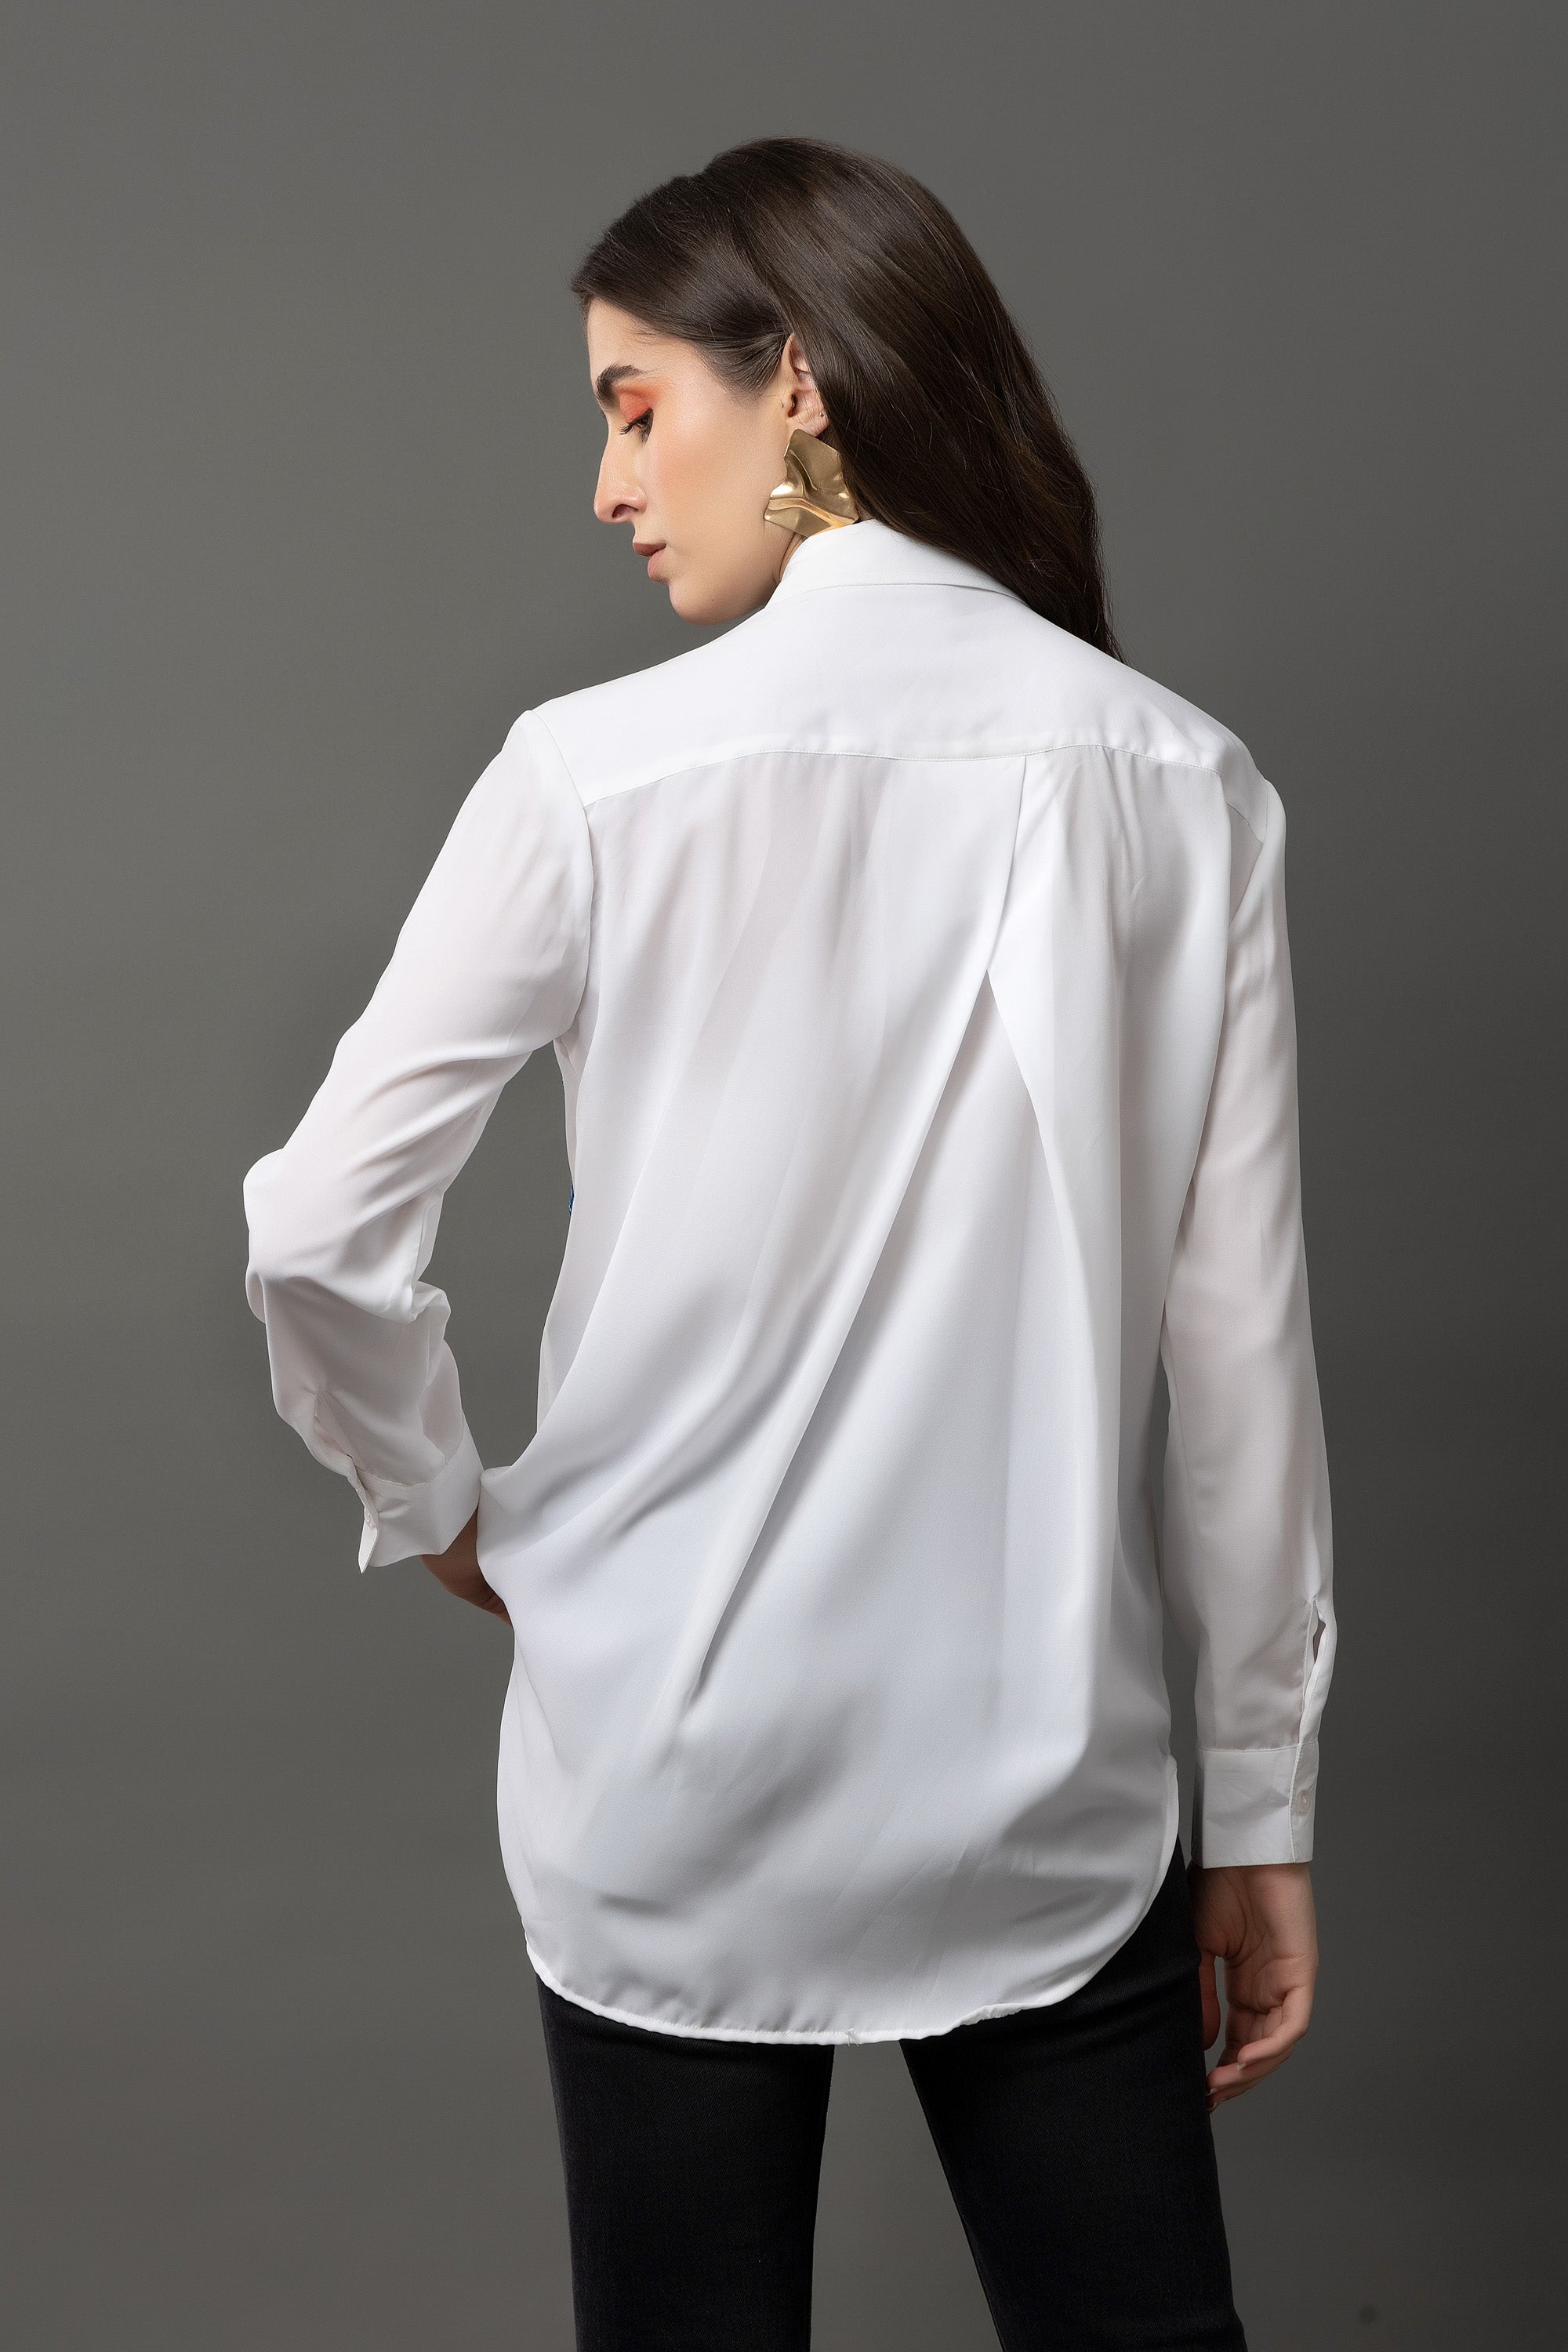 Cobalt Charm White Shirt